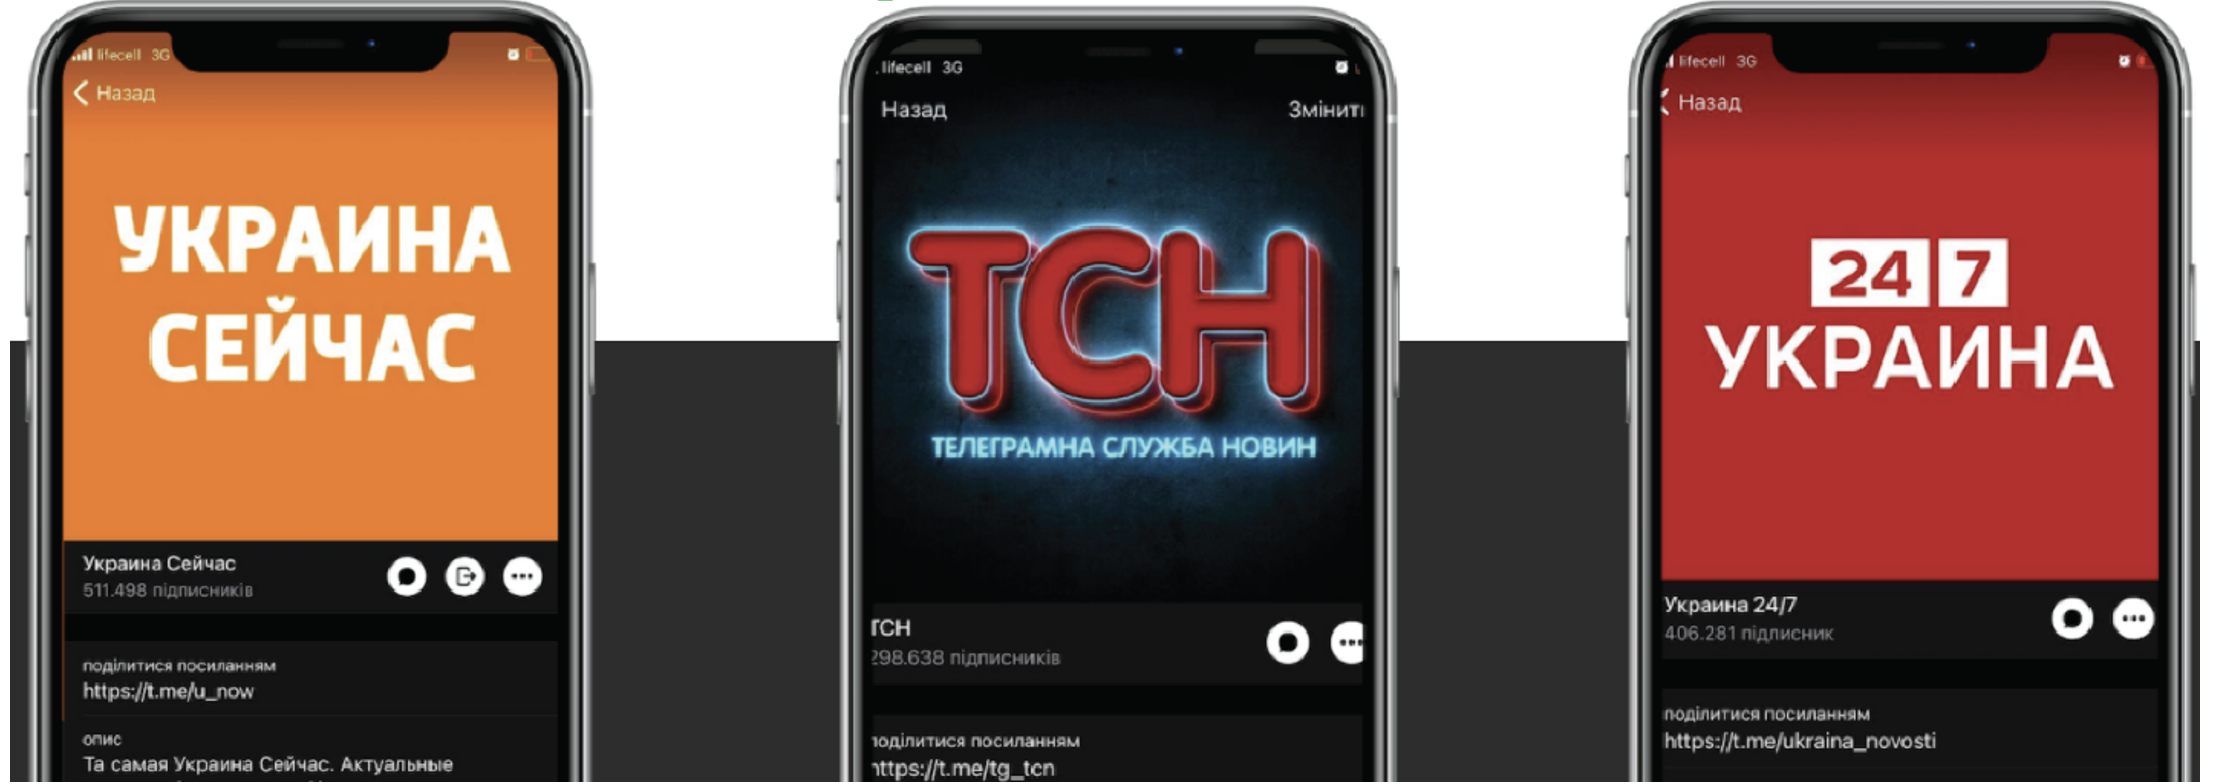 Popular Ukrainian Telegram channels employ TikTok clickbait scheme to grow audiences